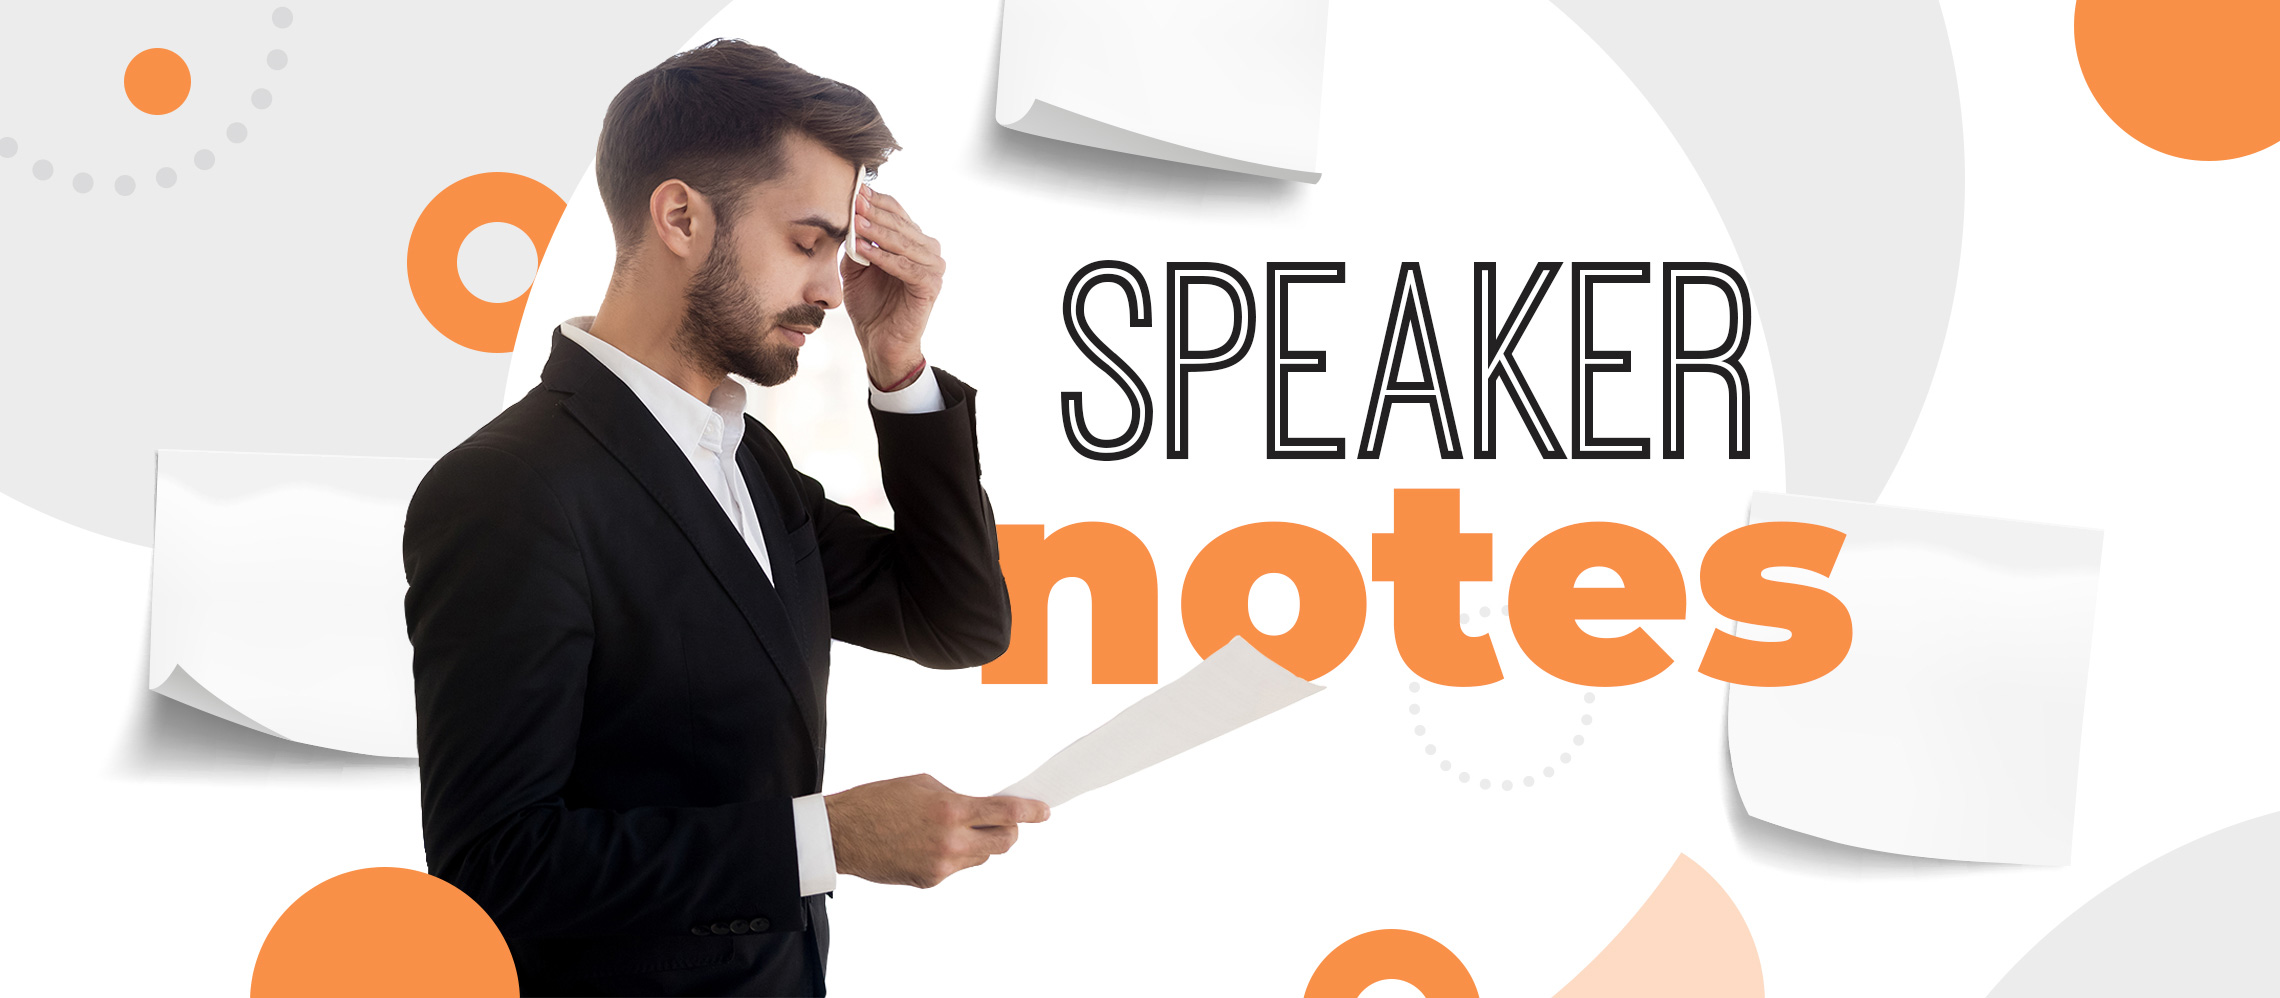 presentation speaker notes